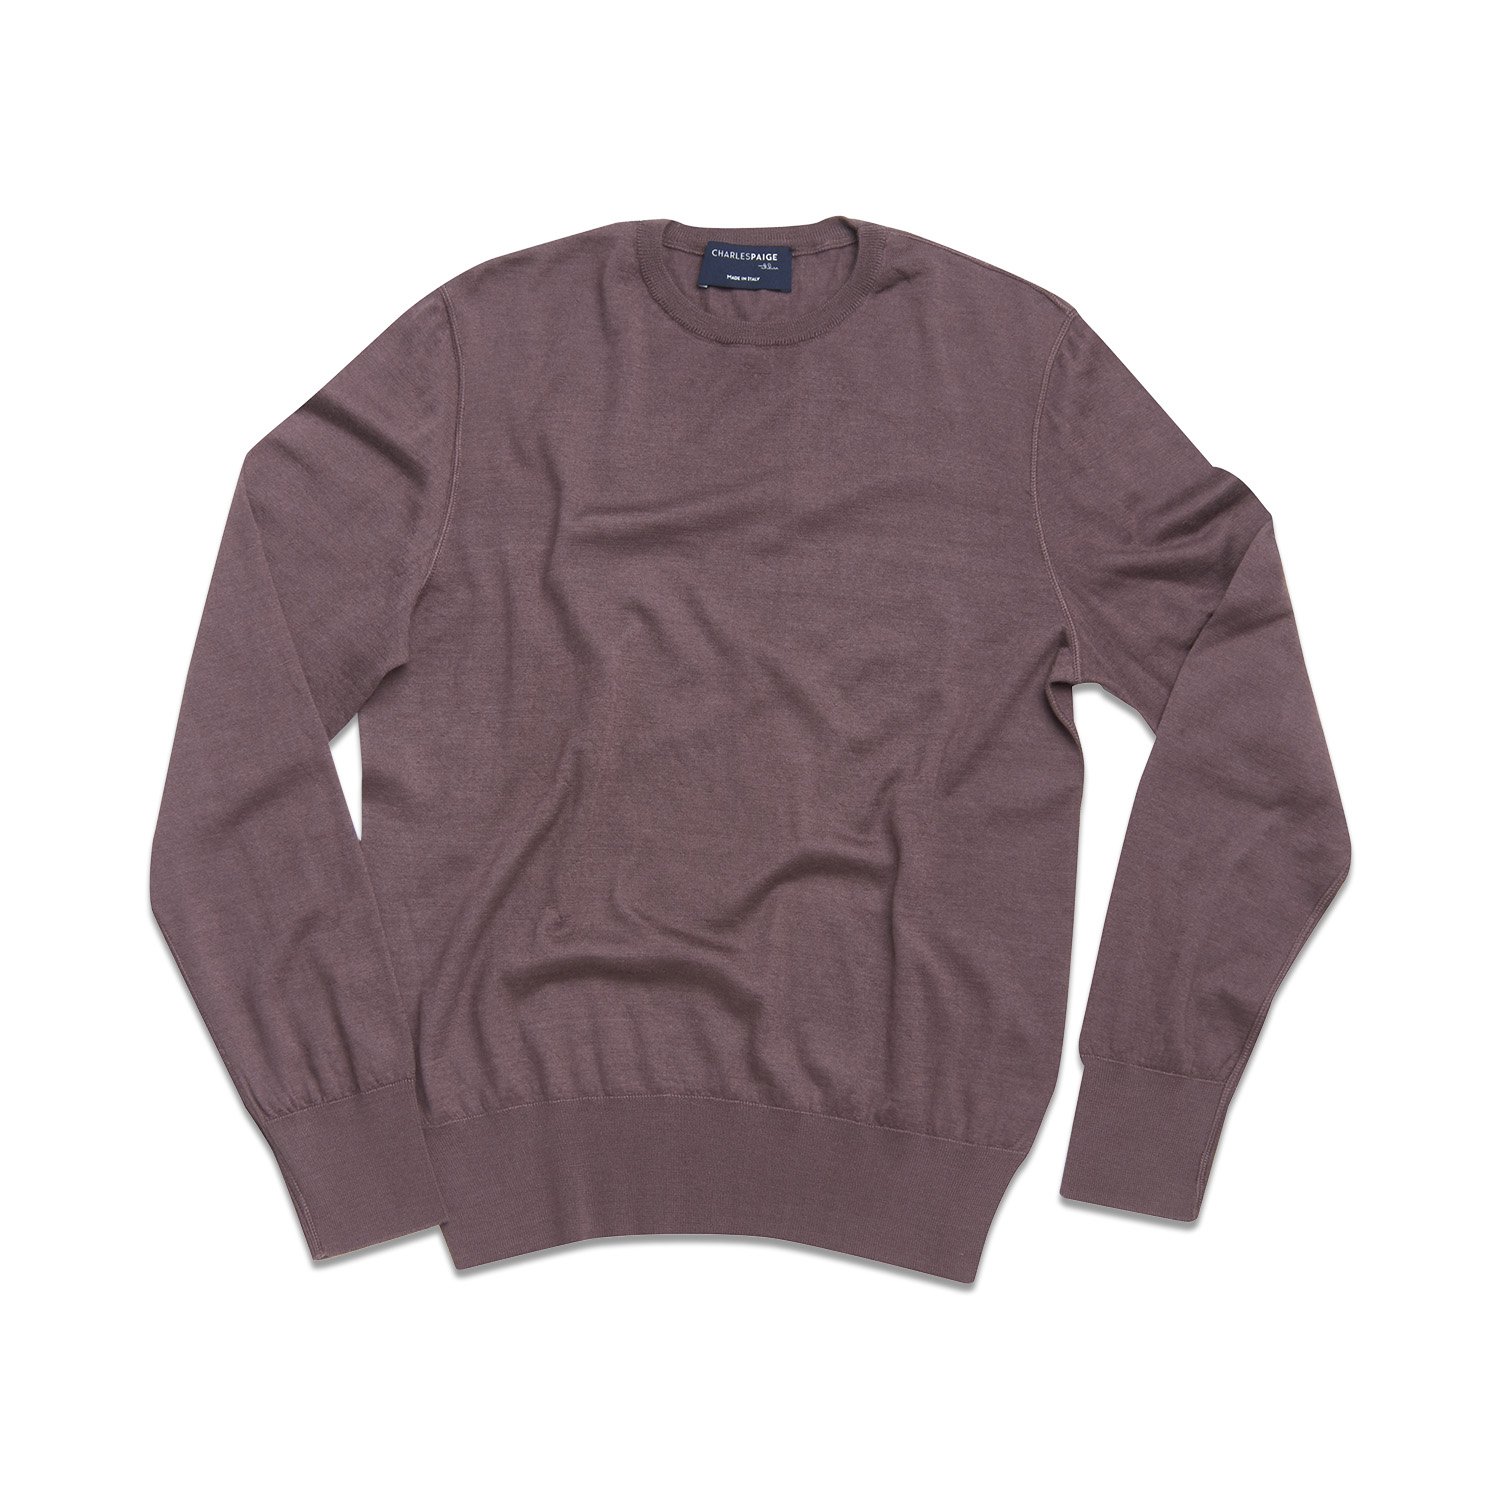 Merlot Crewneck Sweater